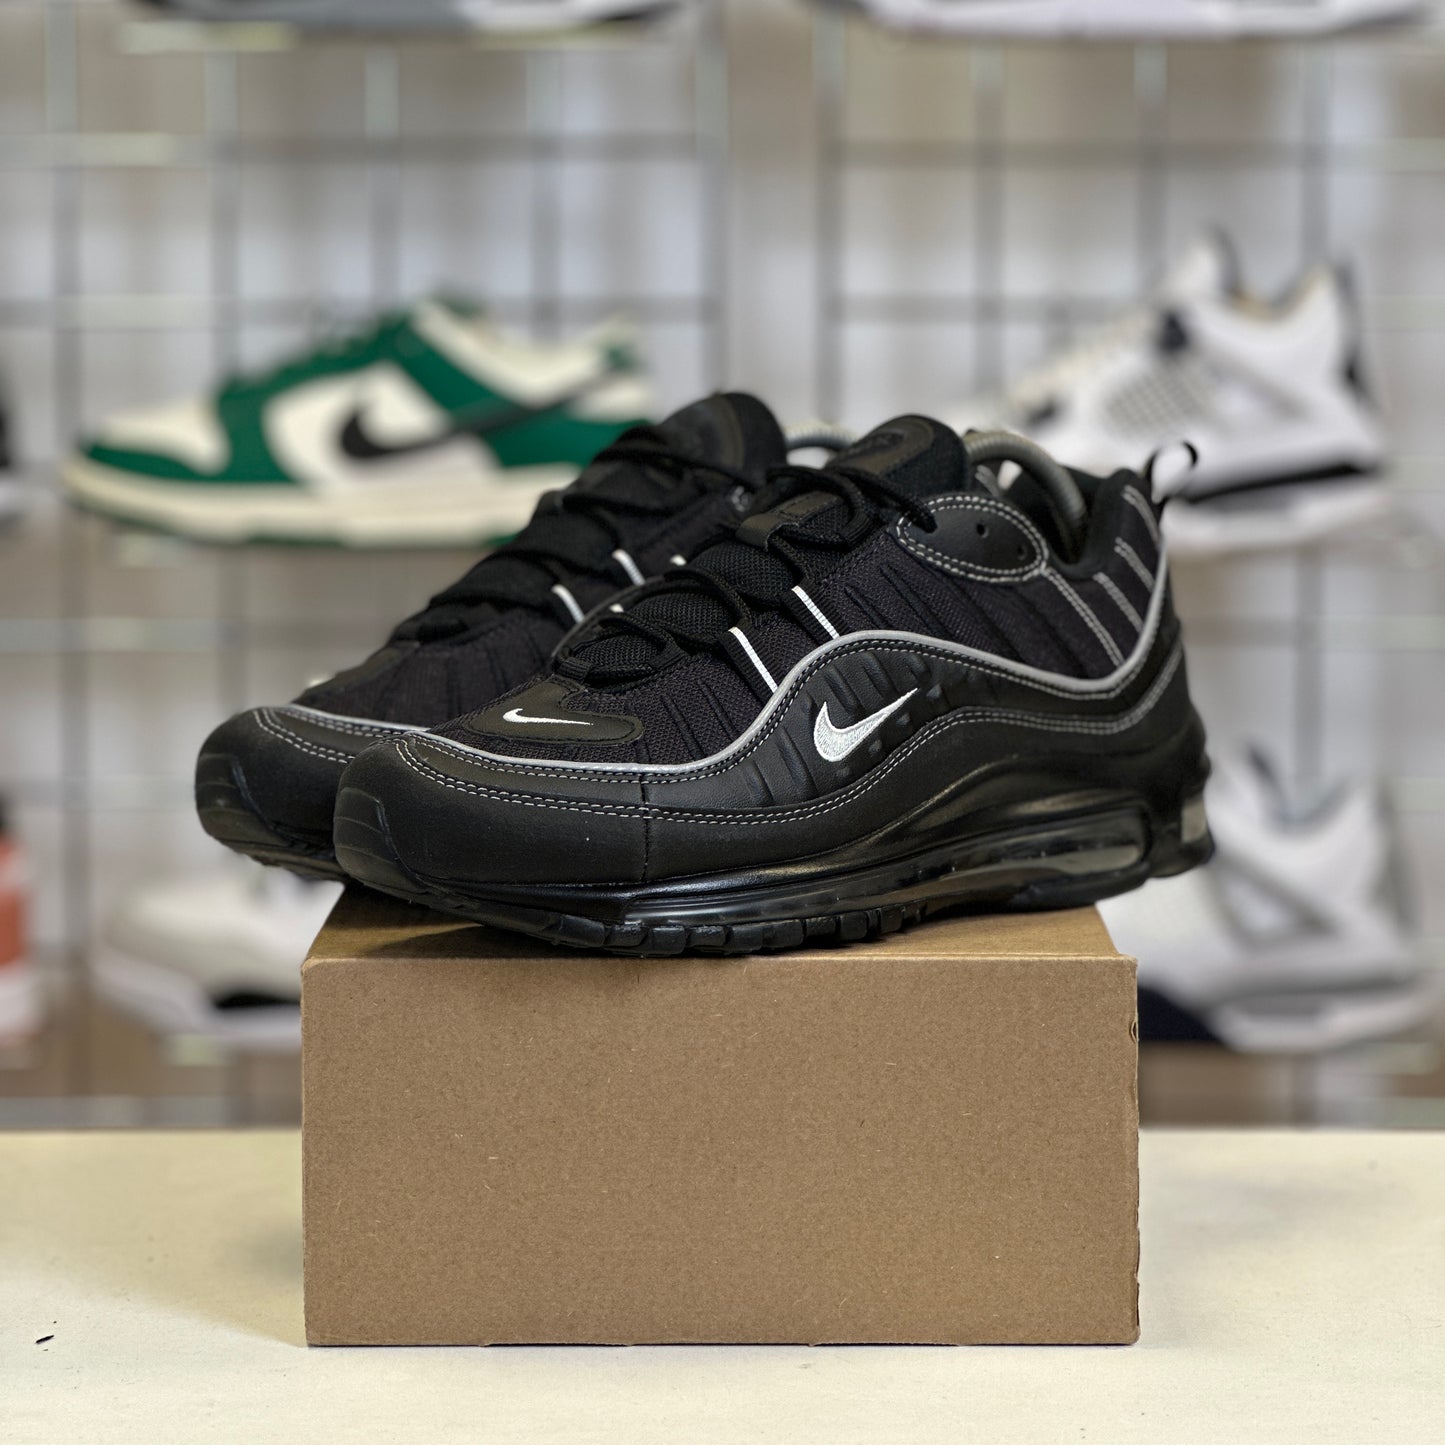 Nike Air Max 98 'Black Oil Grey' UK7 (No Box)